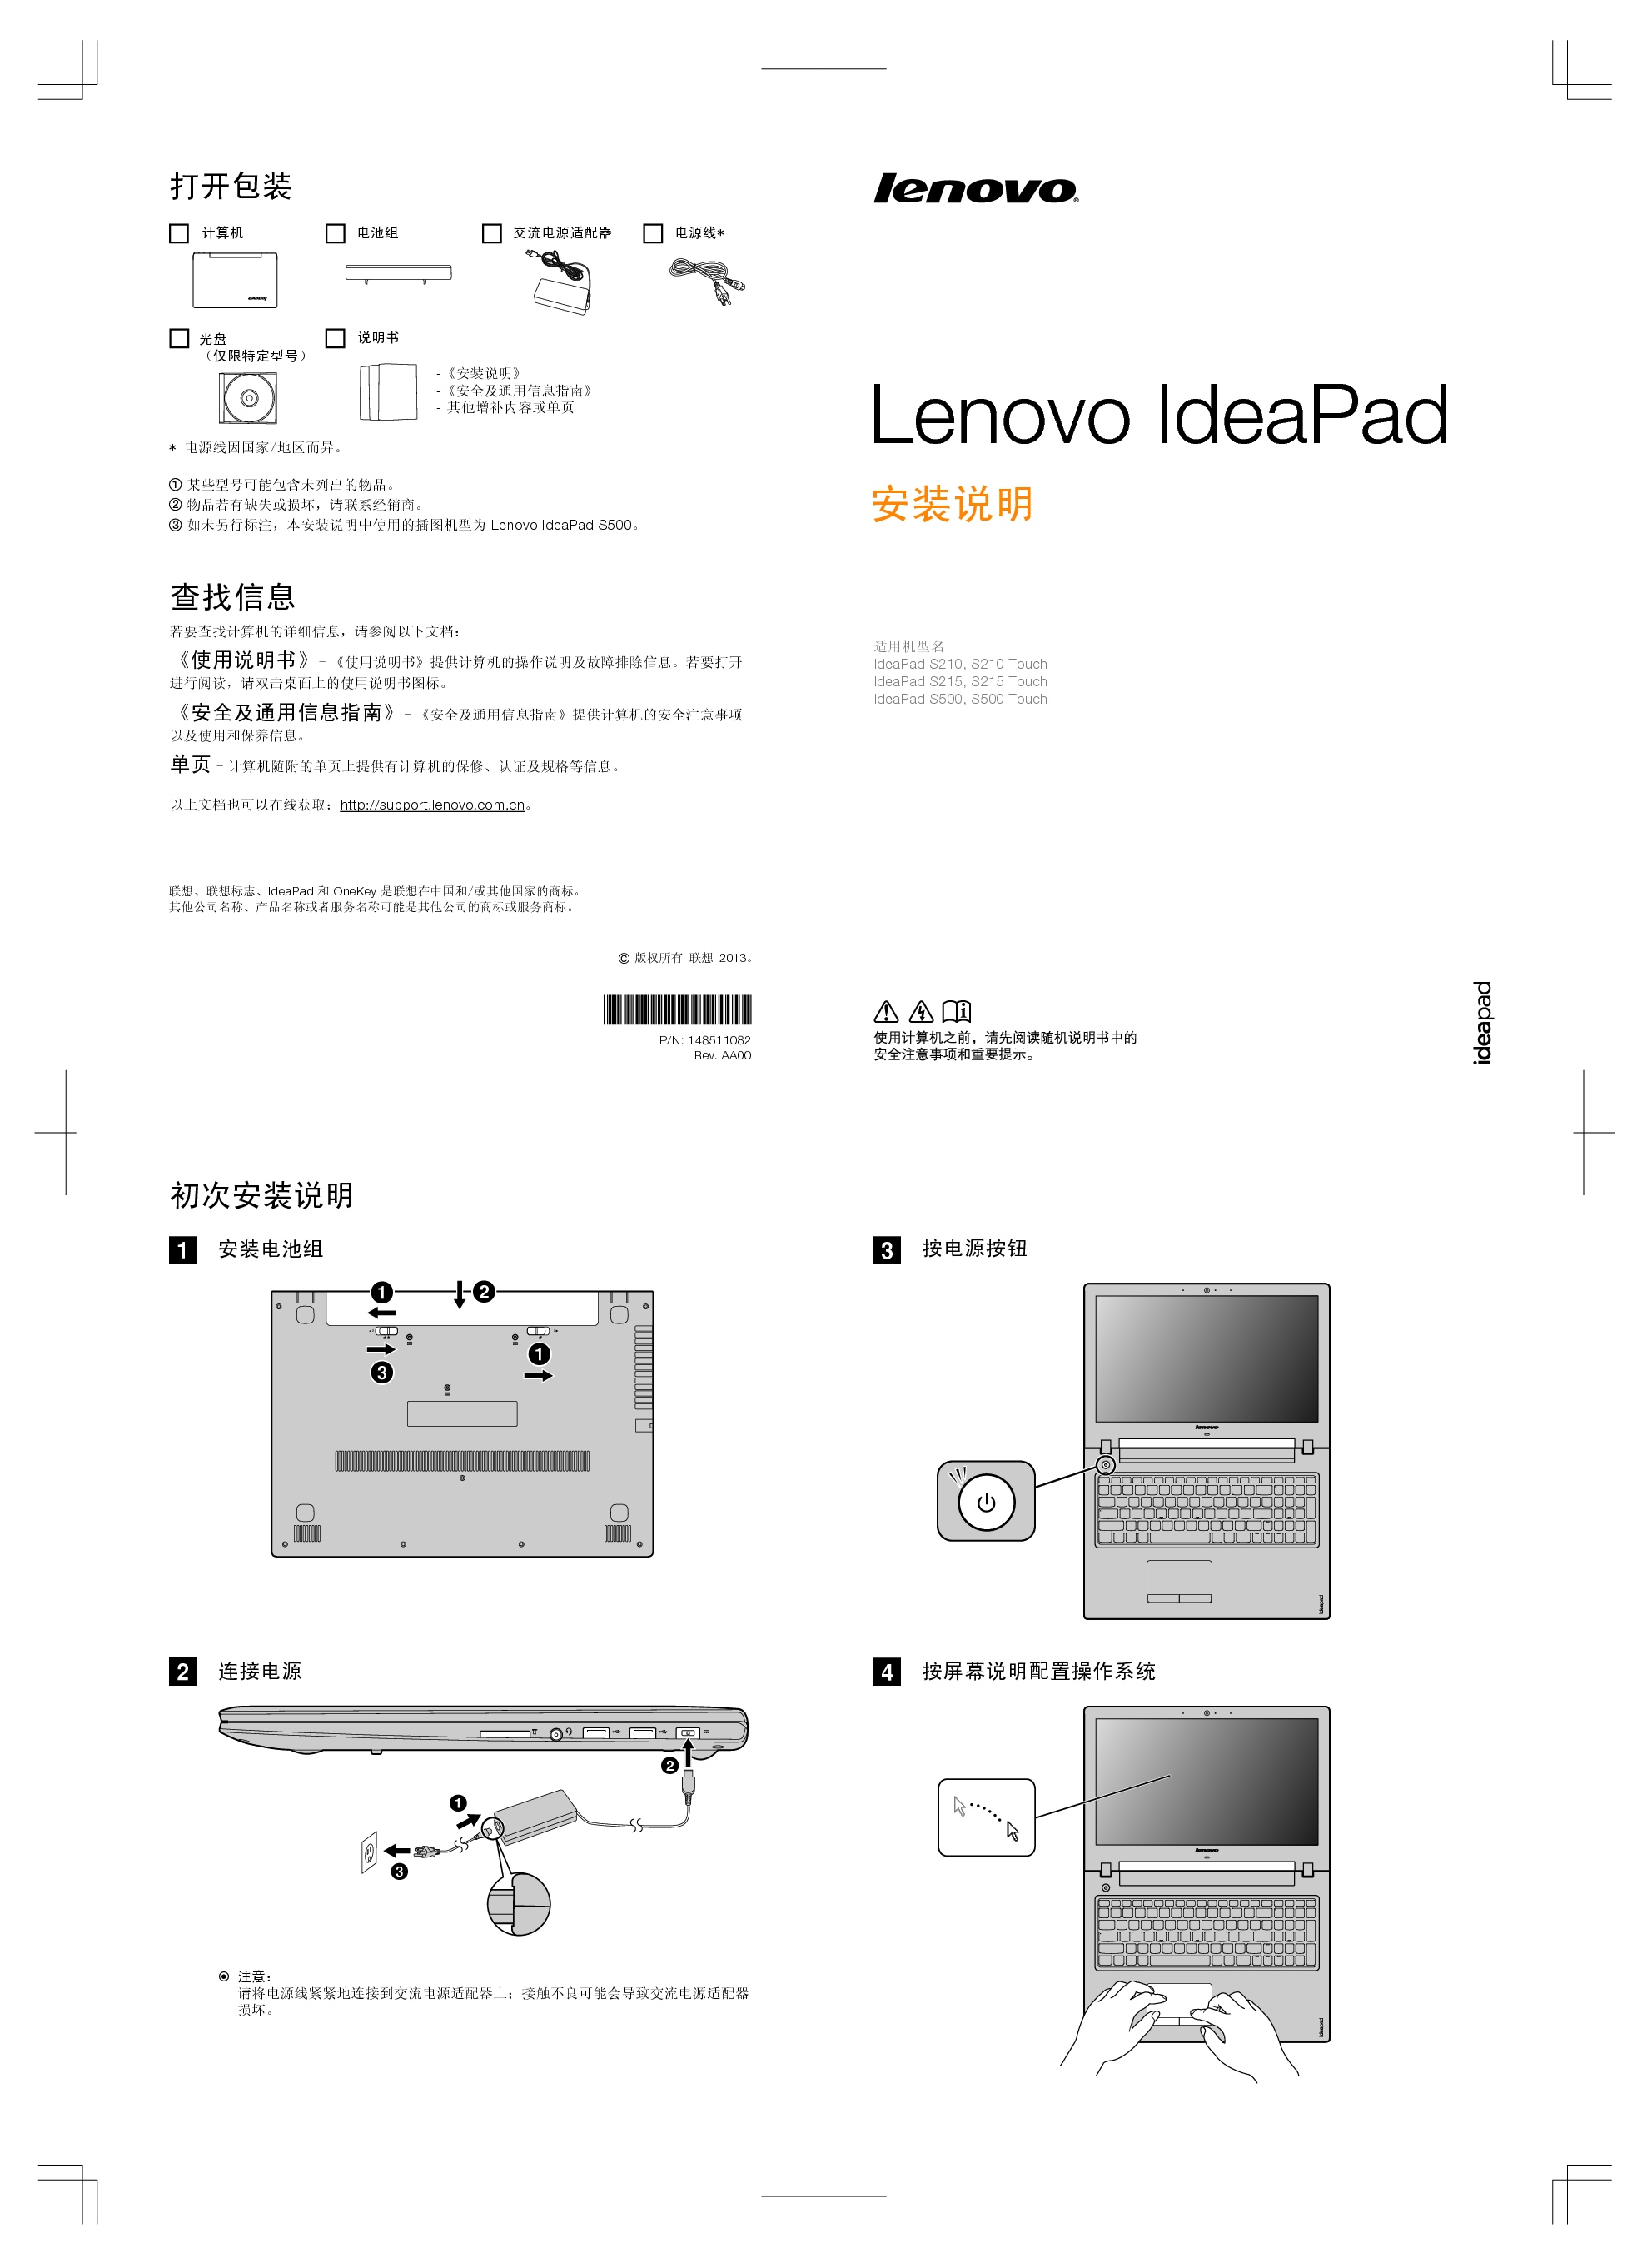 联想 Lenovo IdeaPad S210 安装说明 封面